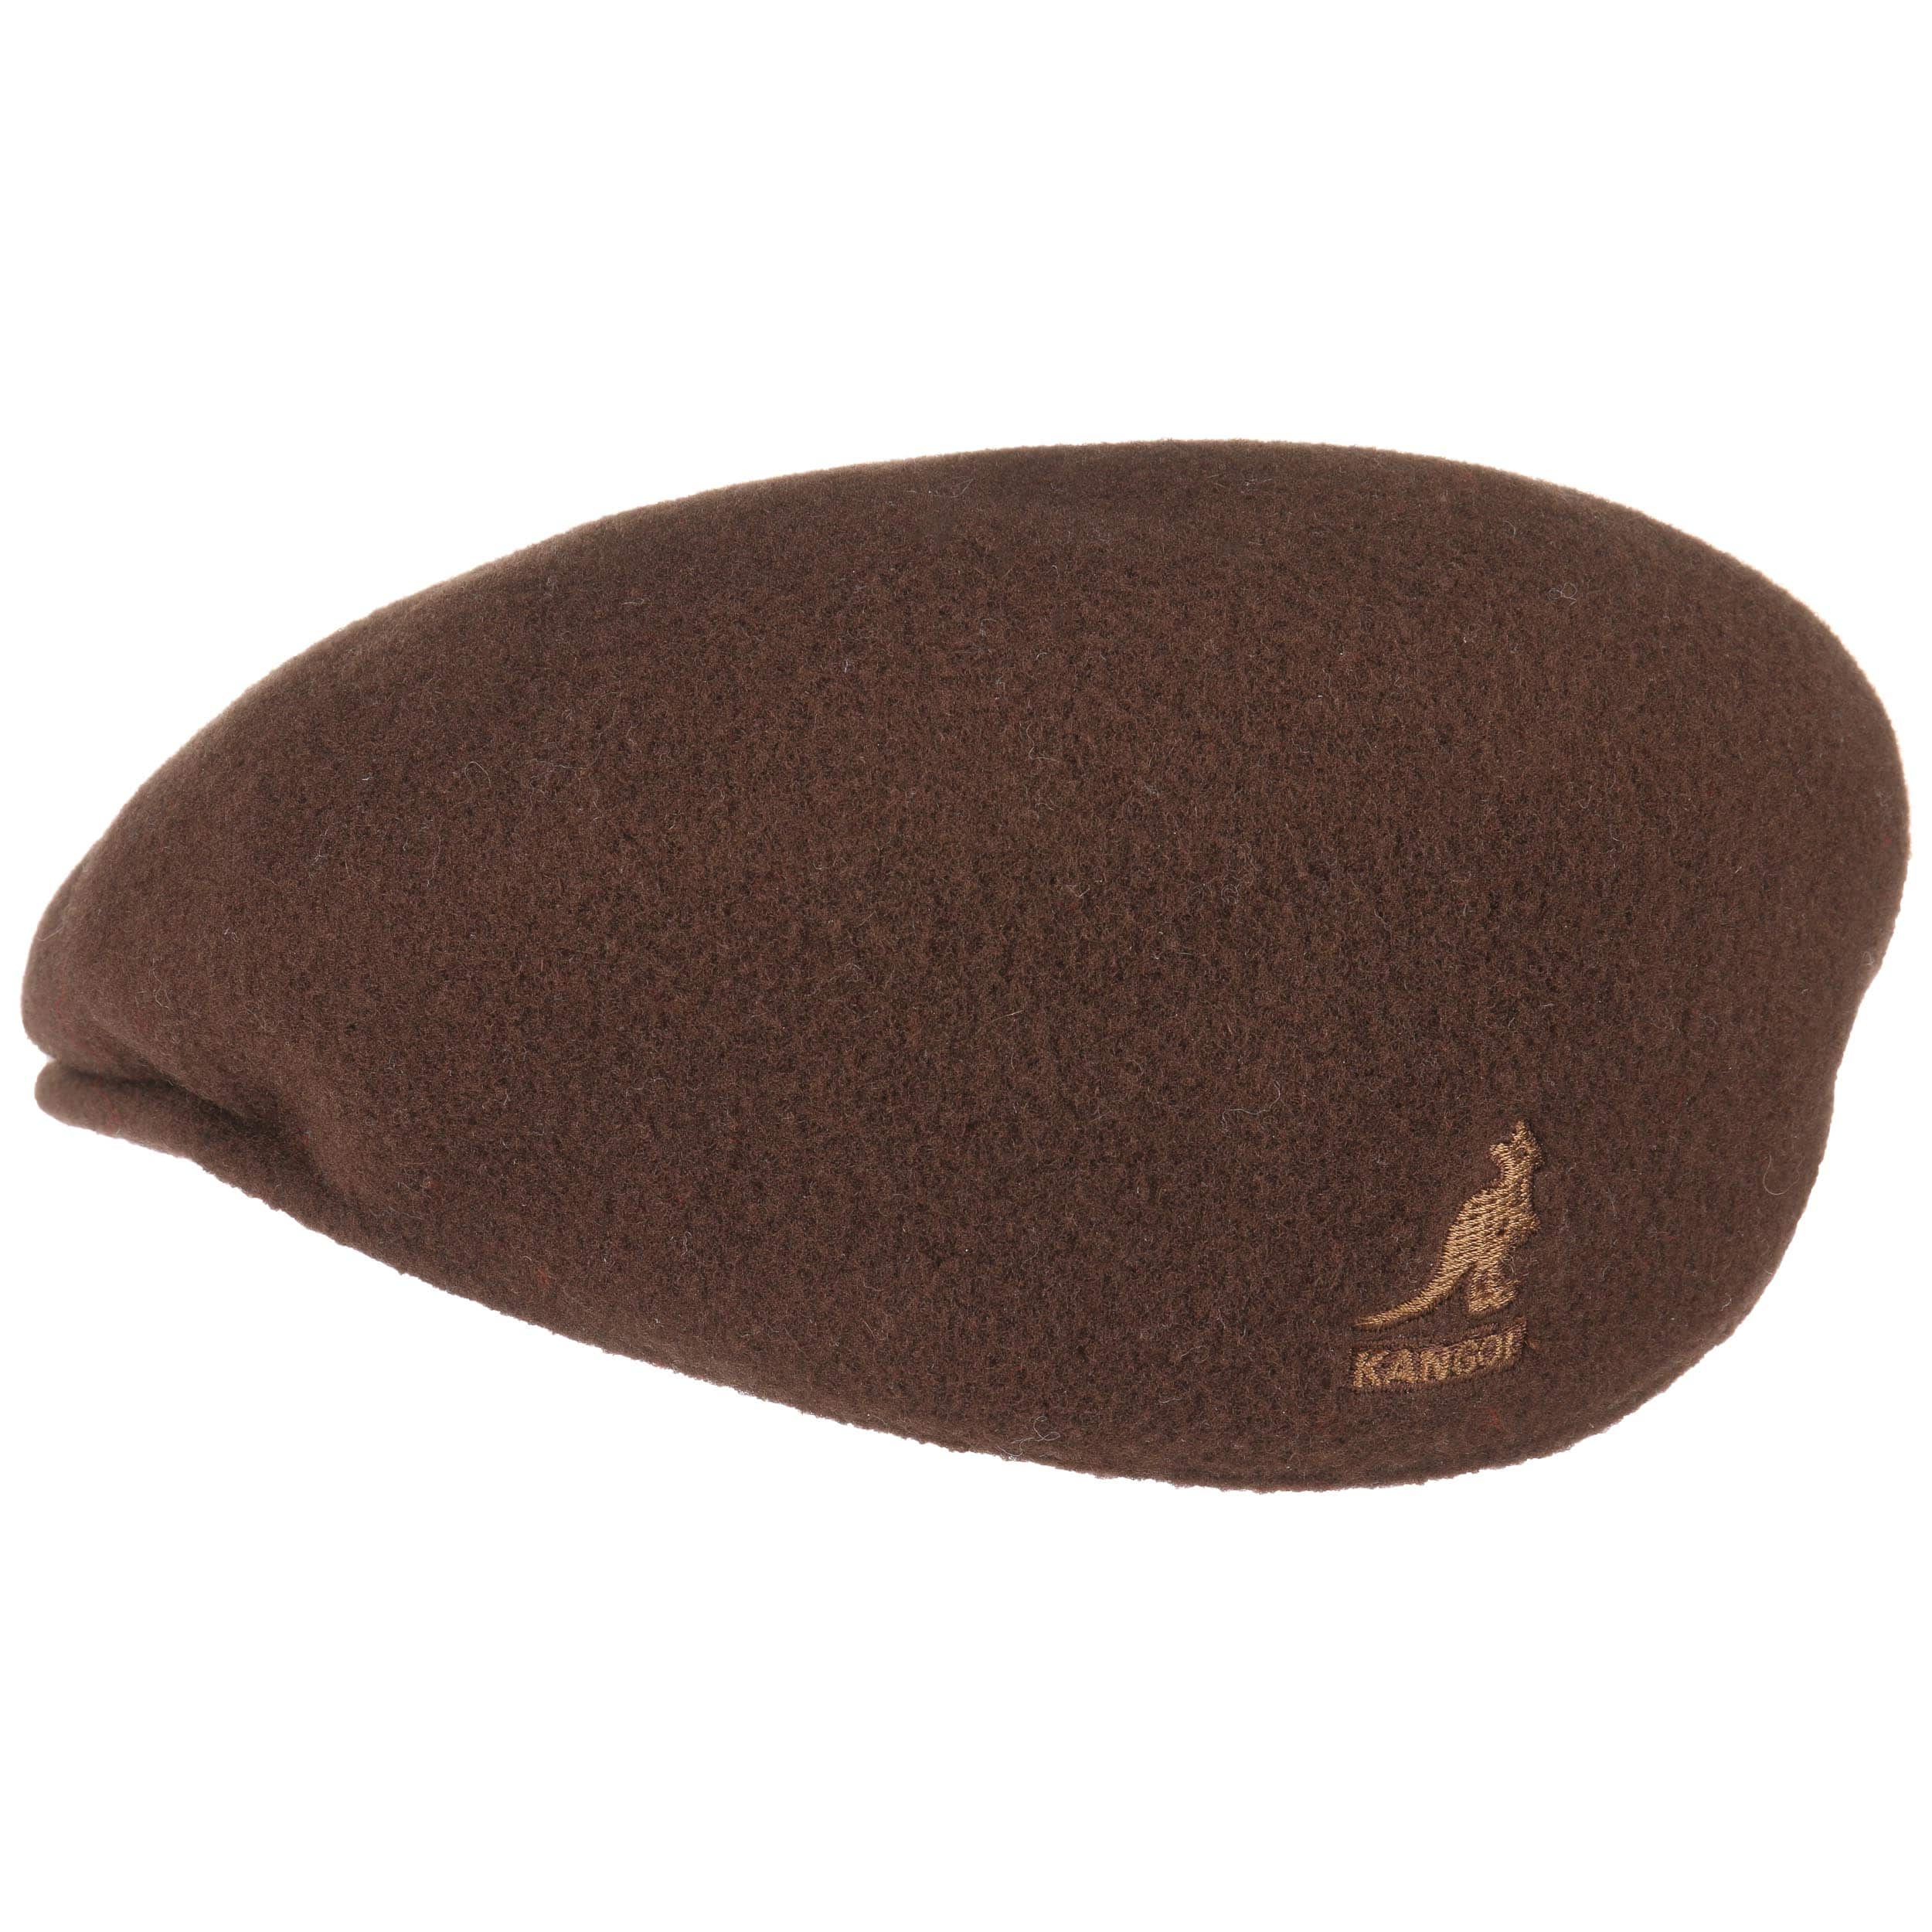 Kangol 504, EUR 45,00 --> Hats, caps & beanies shop online ...